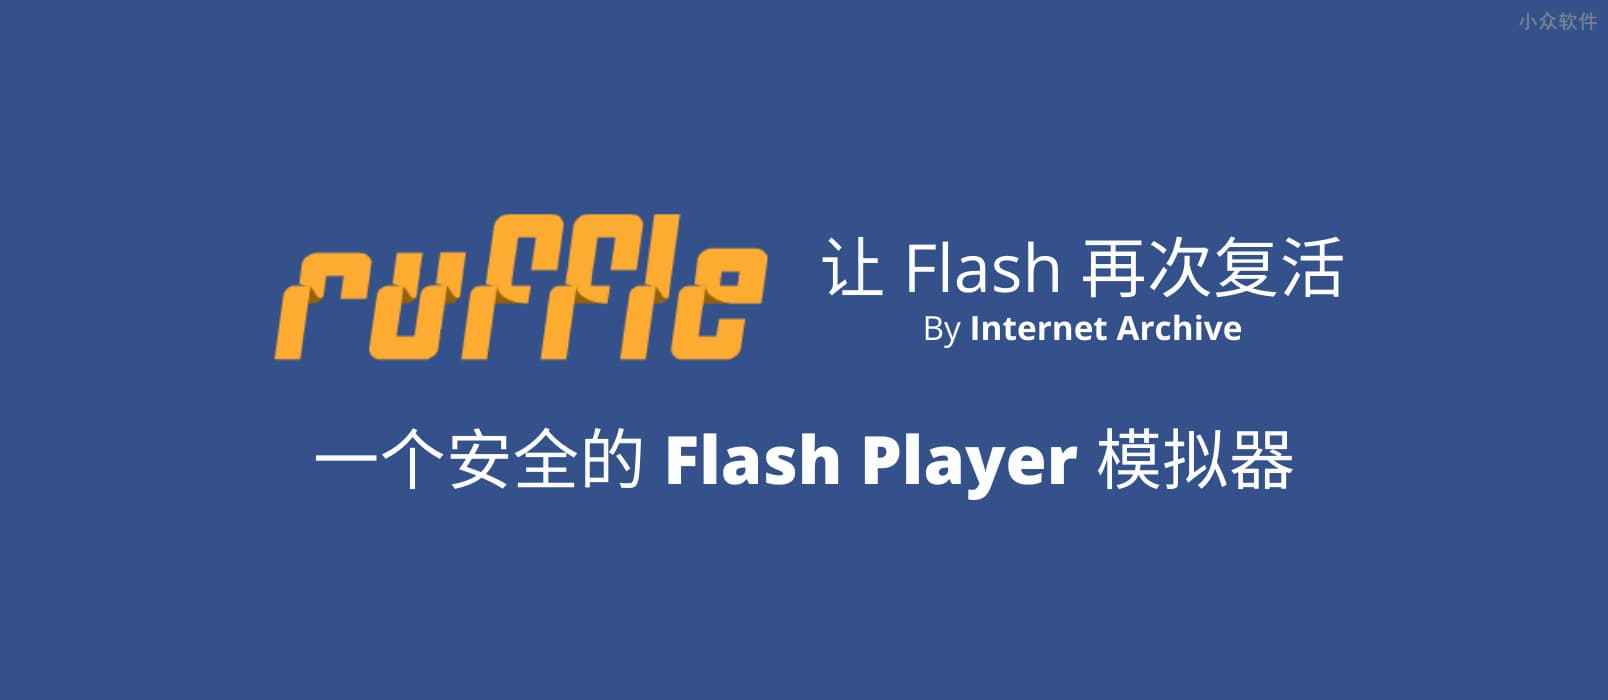 Ruffle – 互联网档案馆 Internet Archive 发布开源 Flash Player 模拟器，让 Flash 复活